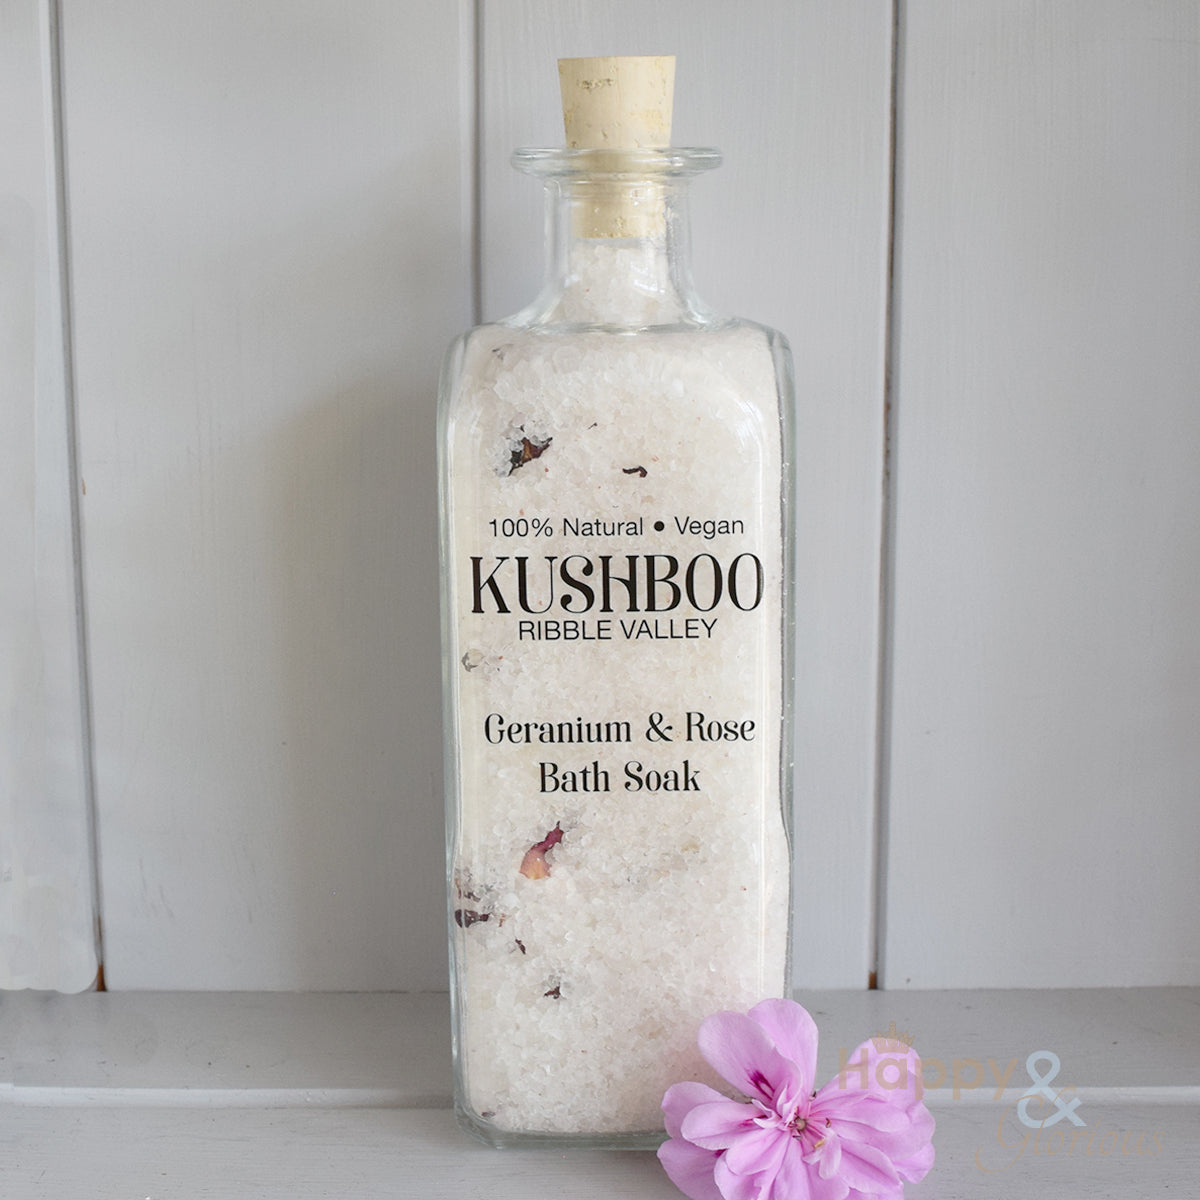 Kushboo geranium & rose handmade vegan bath soak with essential oils